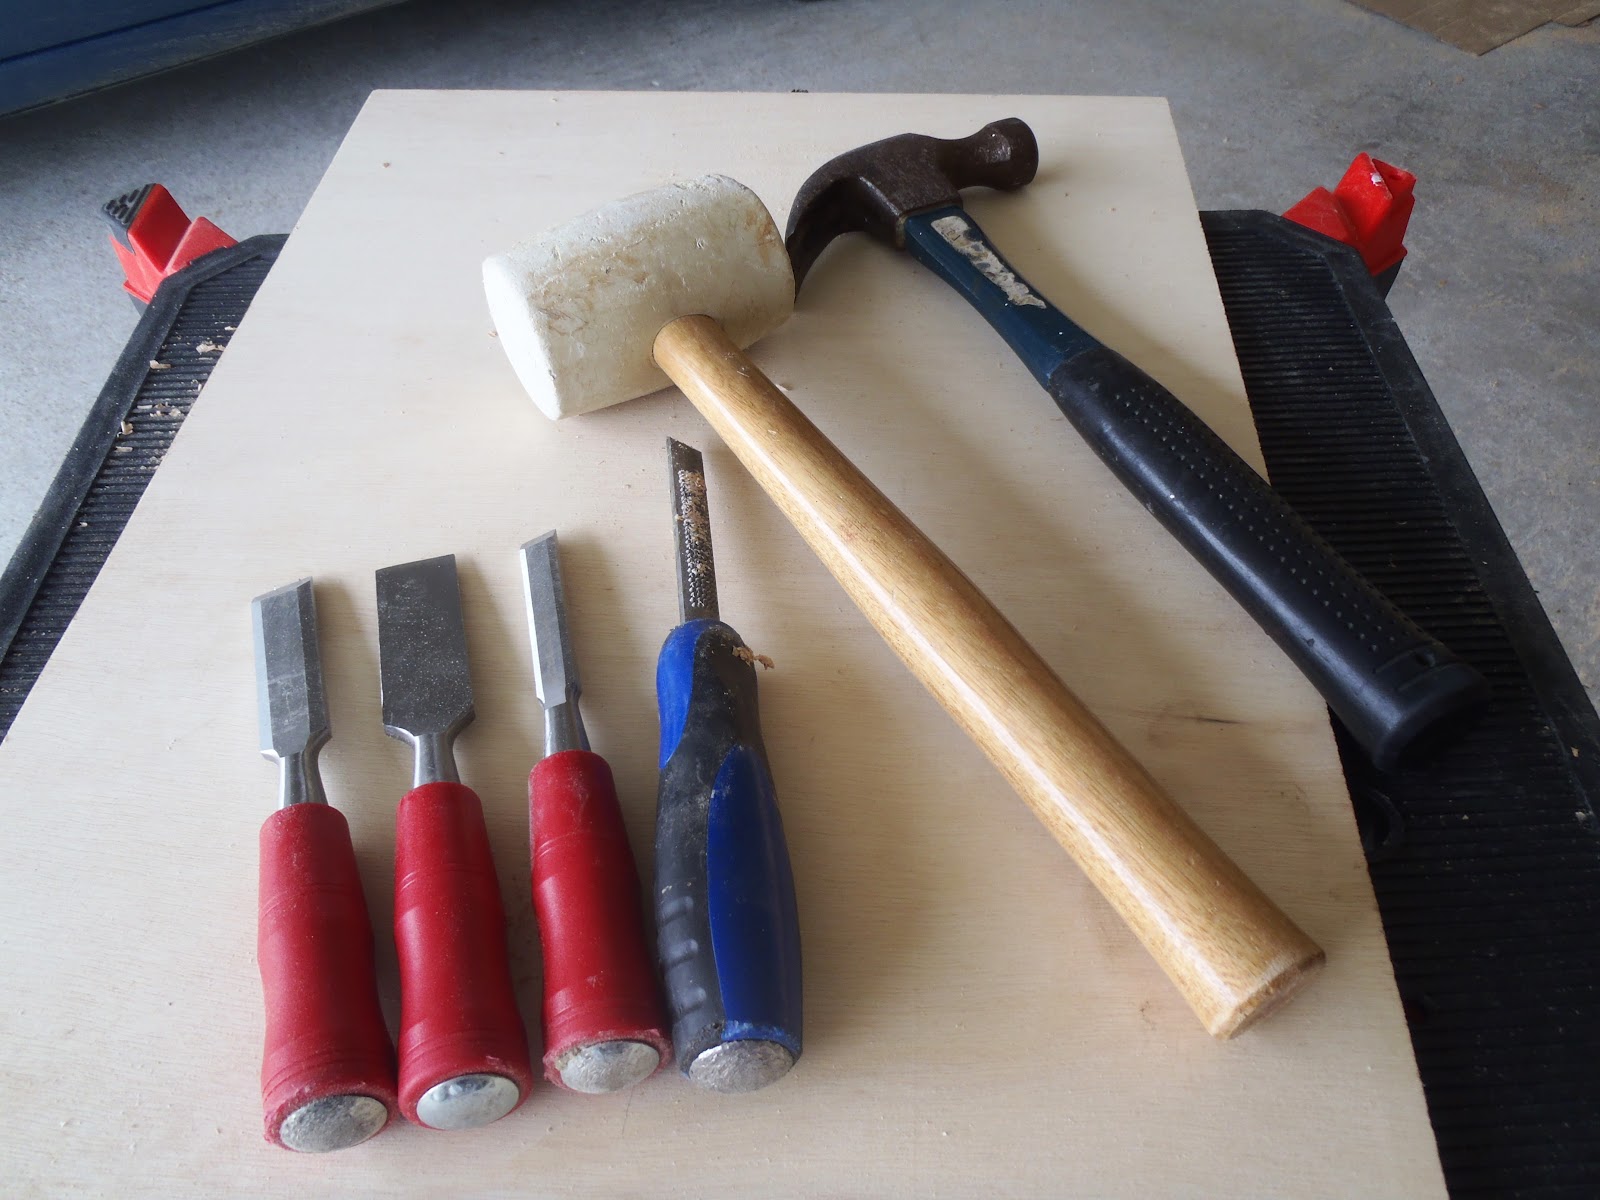 Lazy Liz on Less: My basic carpentry tools